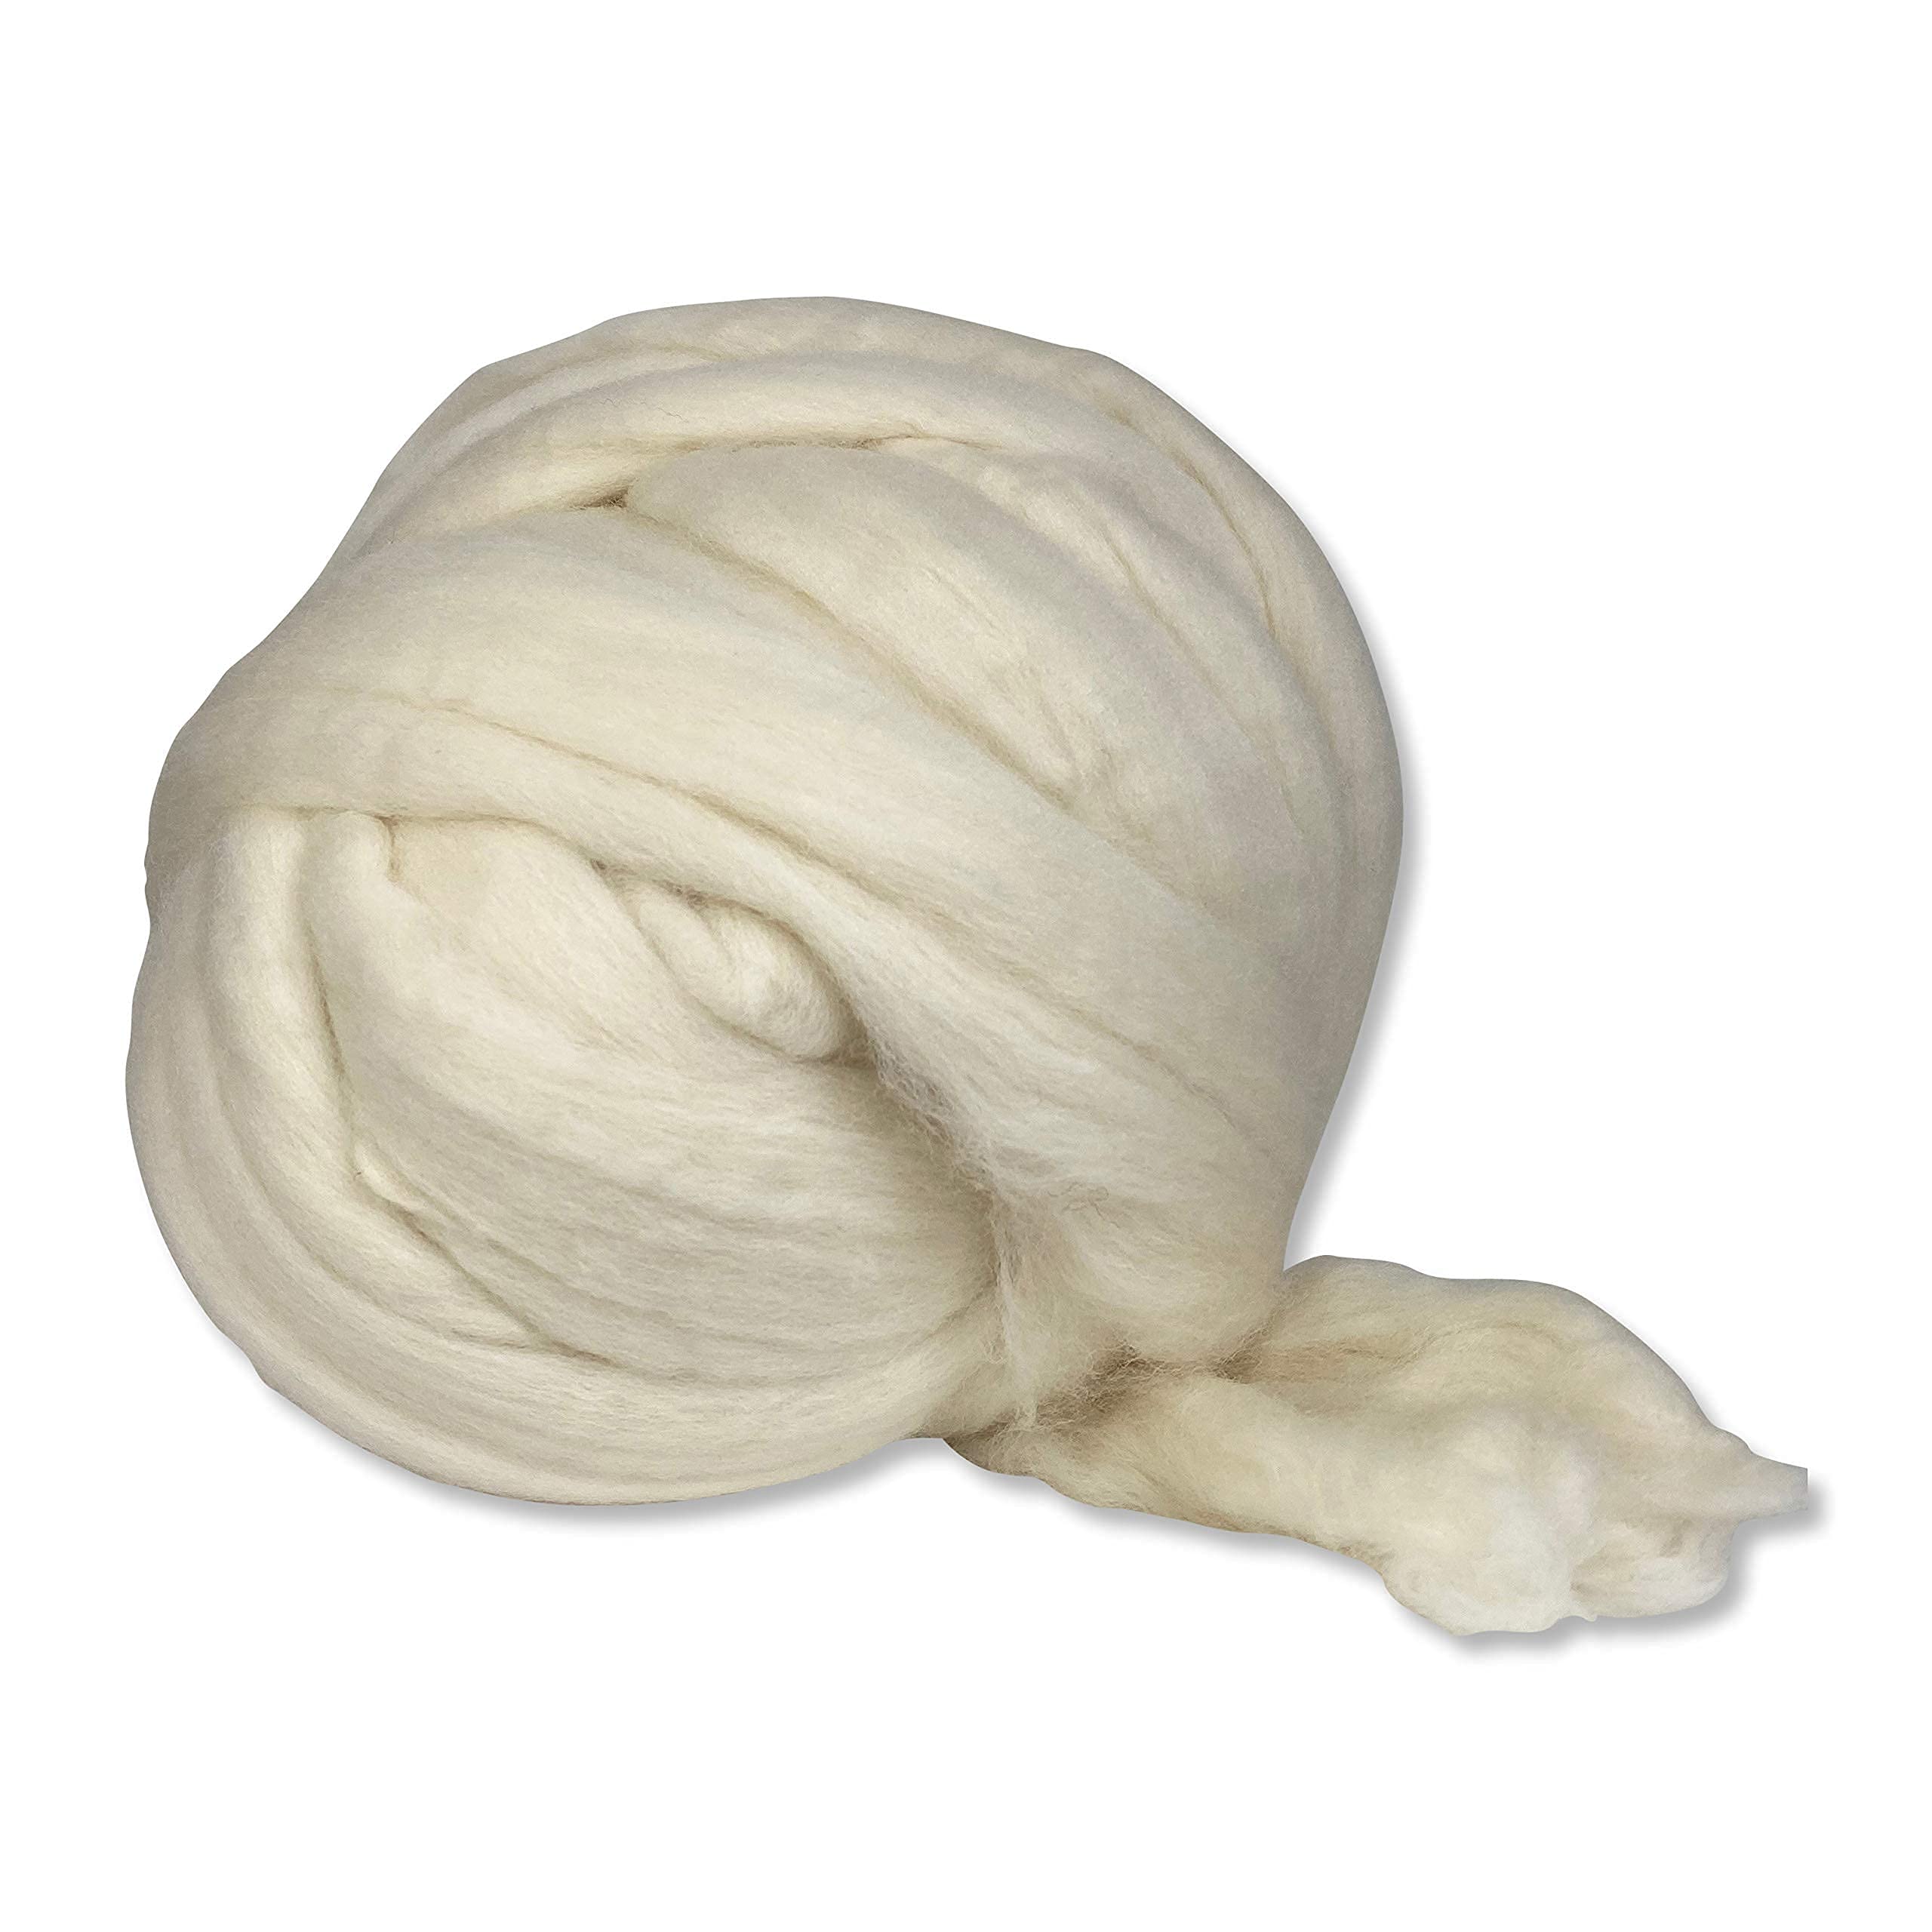 Revolution Fibers Cheviot Wool Roving Top 1 lb (16 Ounces) for Spinning, Soft Chunky Jumbo Yarn for Arm Knitting Blanket